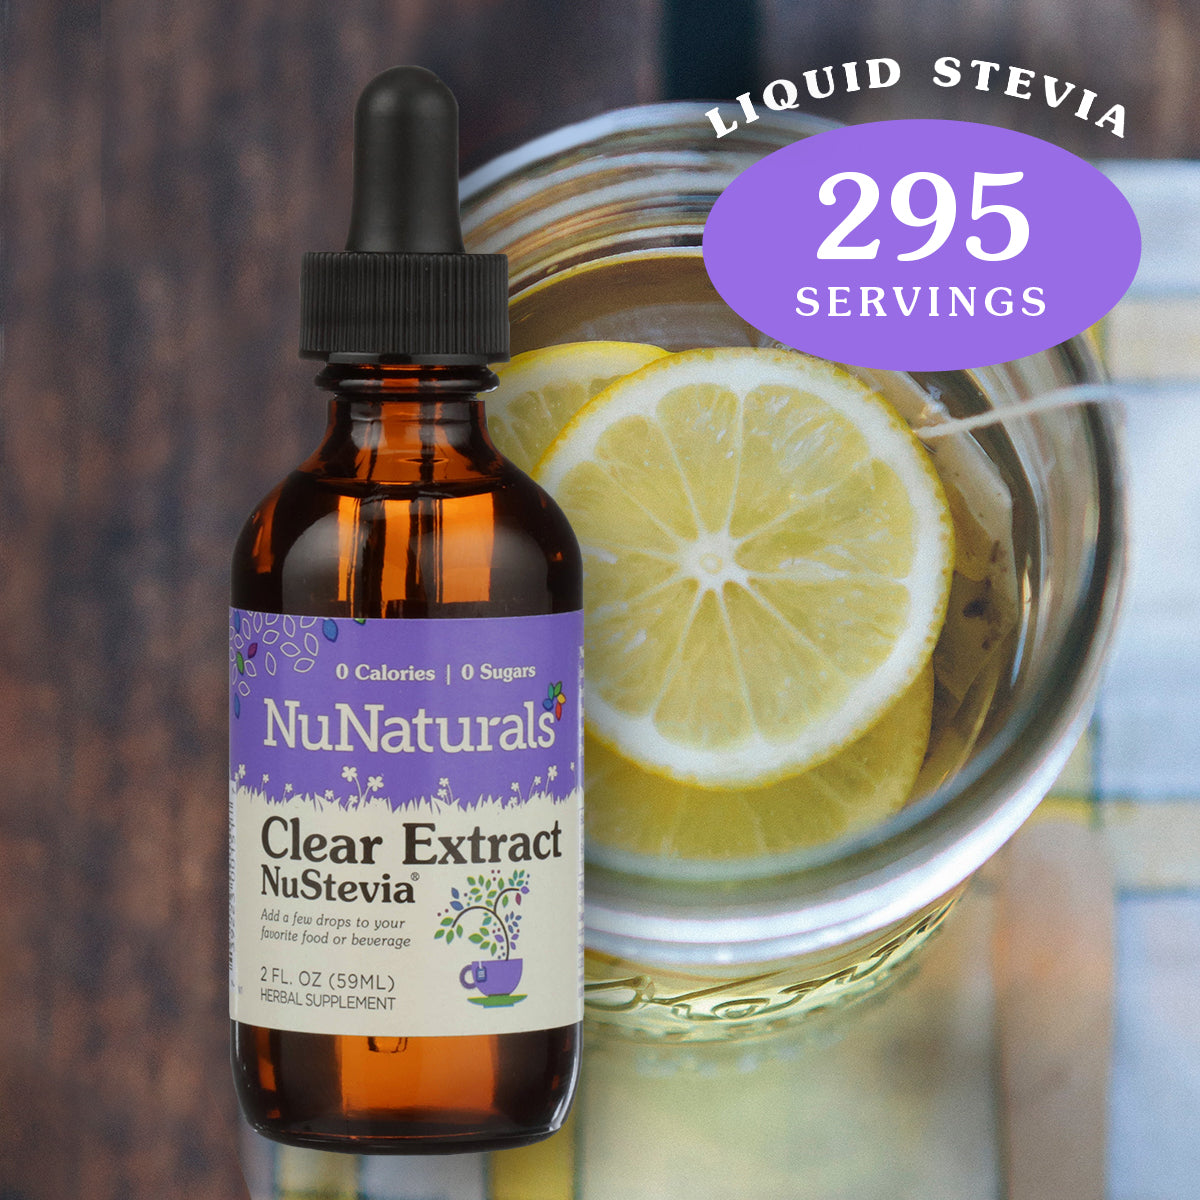 2 oz. NuNaturals Clear Extract Liquid Stevia with glass of iced tea with lemon